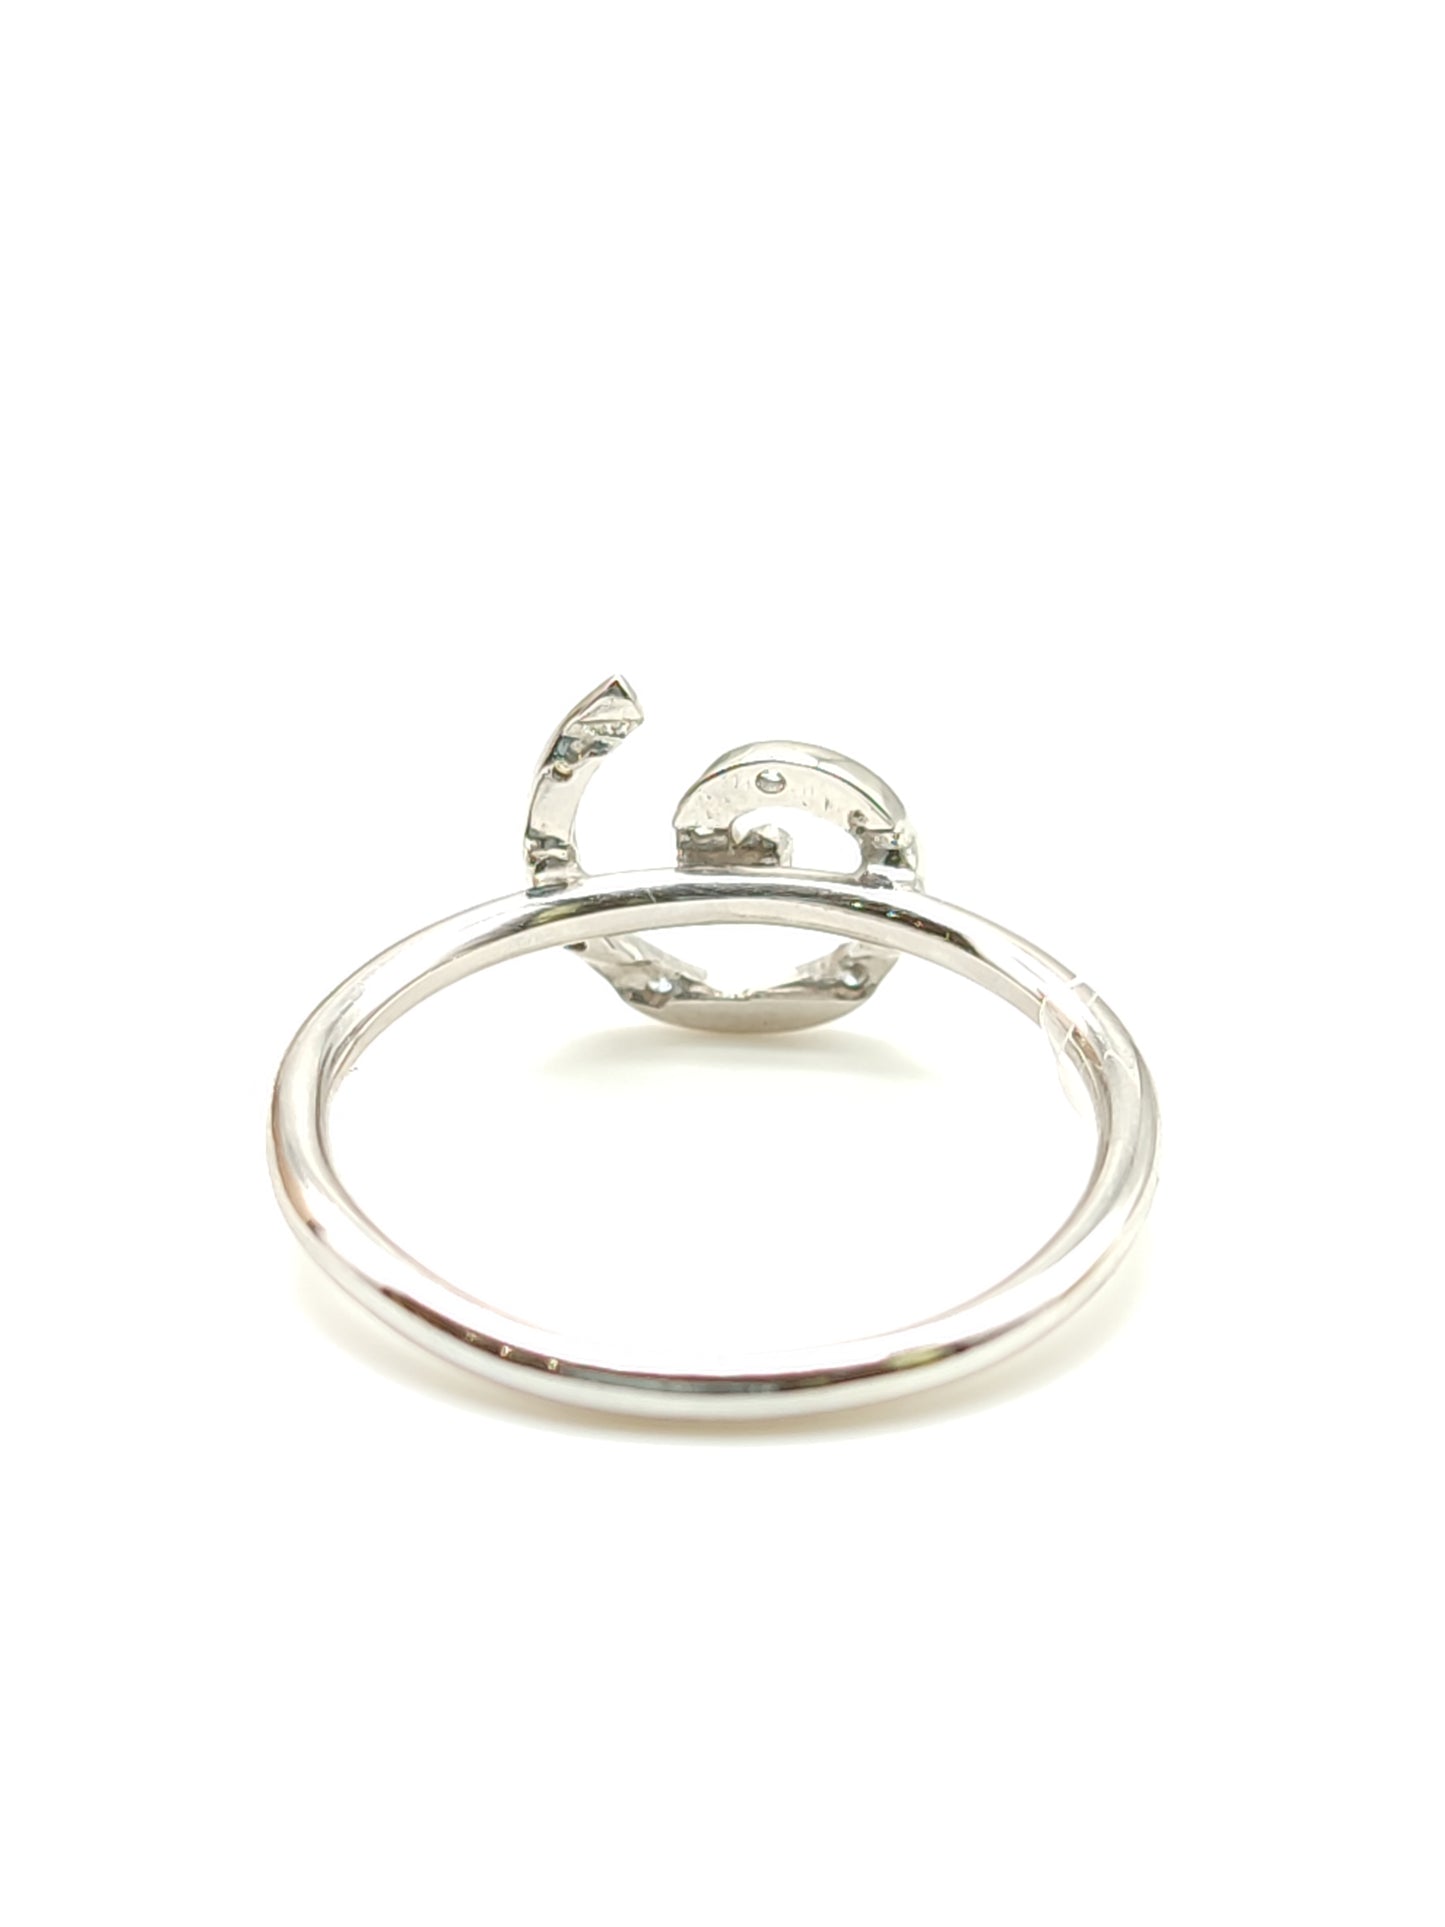 Recarlo - Fancy ring with diamonds 0.10ct